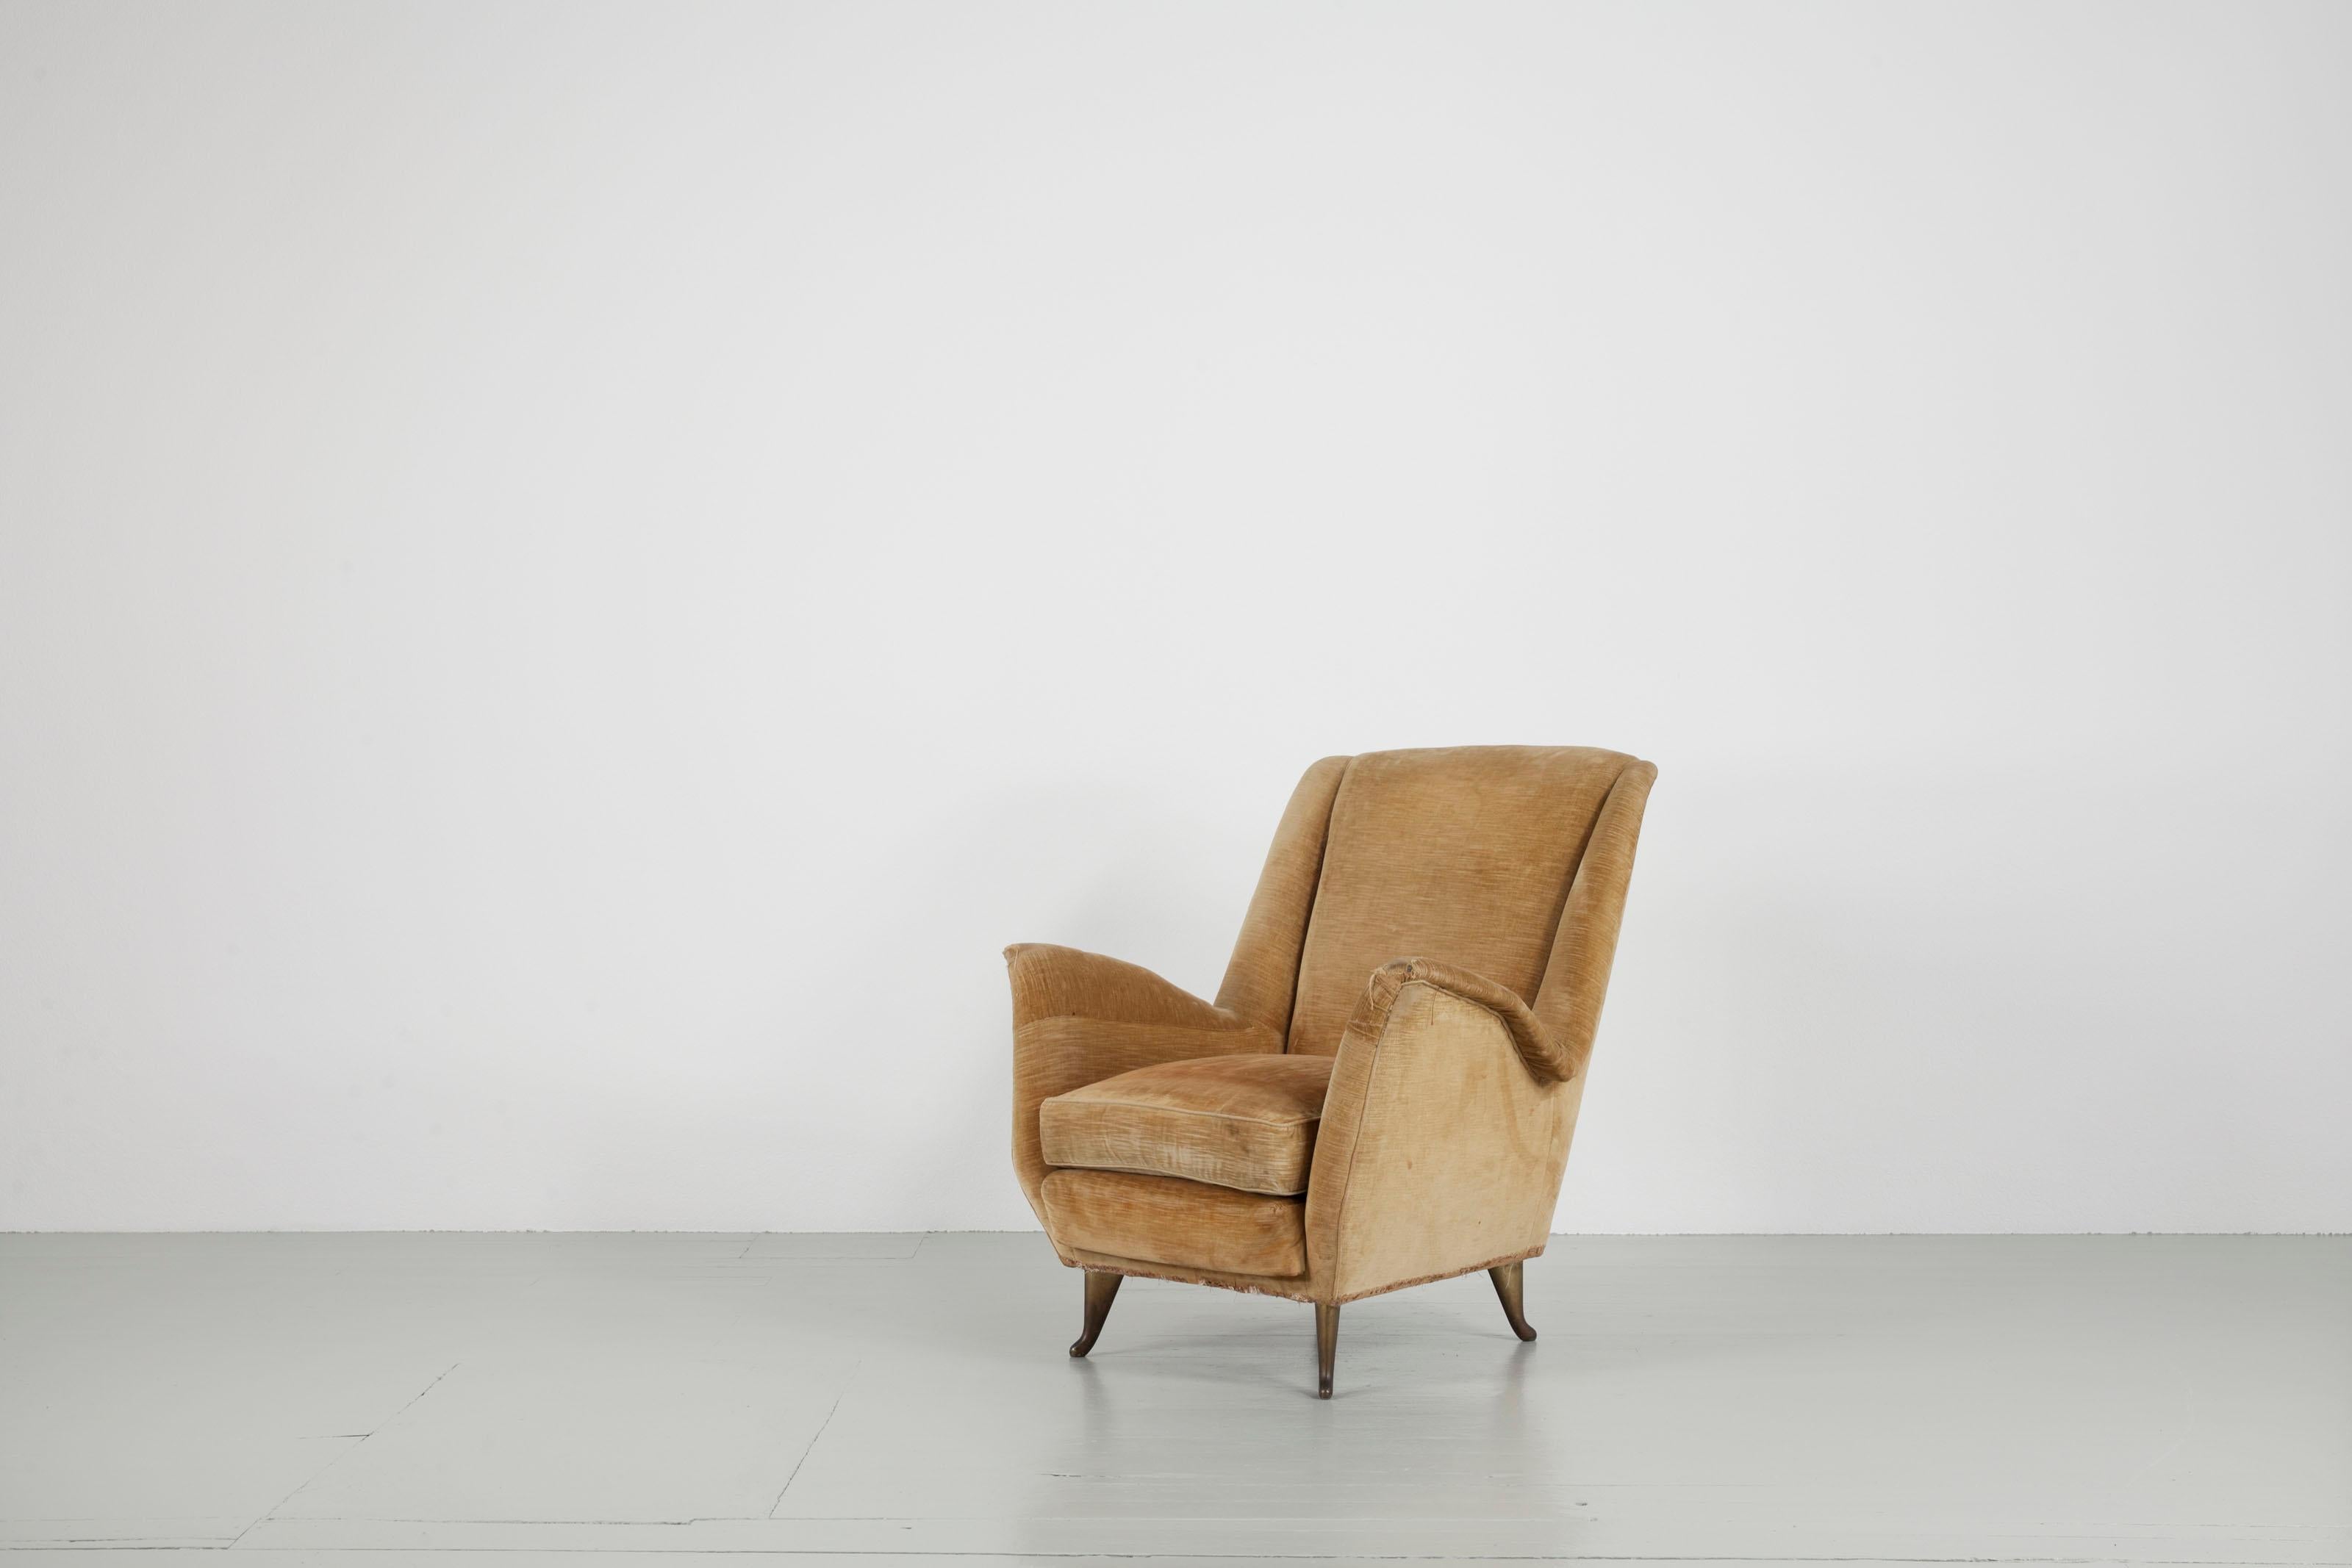 Textile I. S. A. Bergamo Italian Set of Two Cream Coloured Wingback Chairs, 1950s For Sale